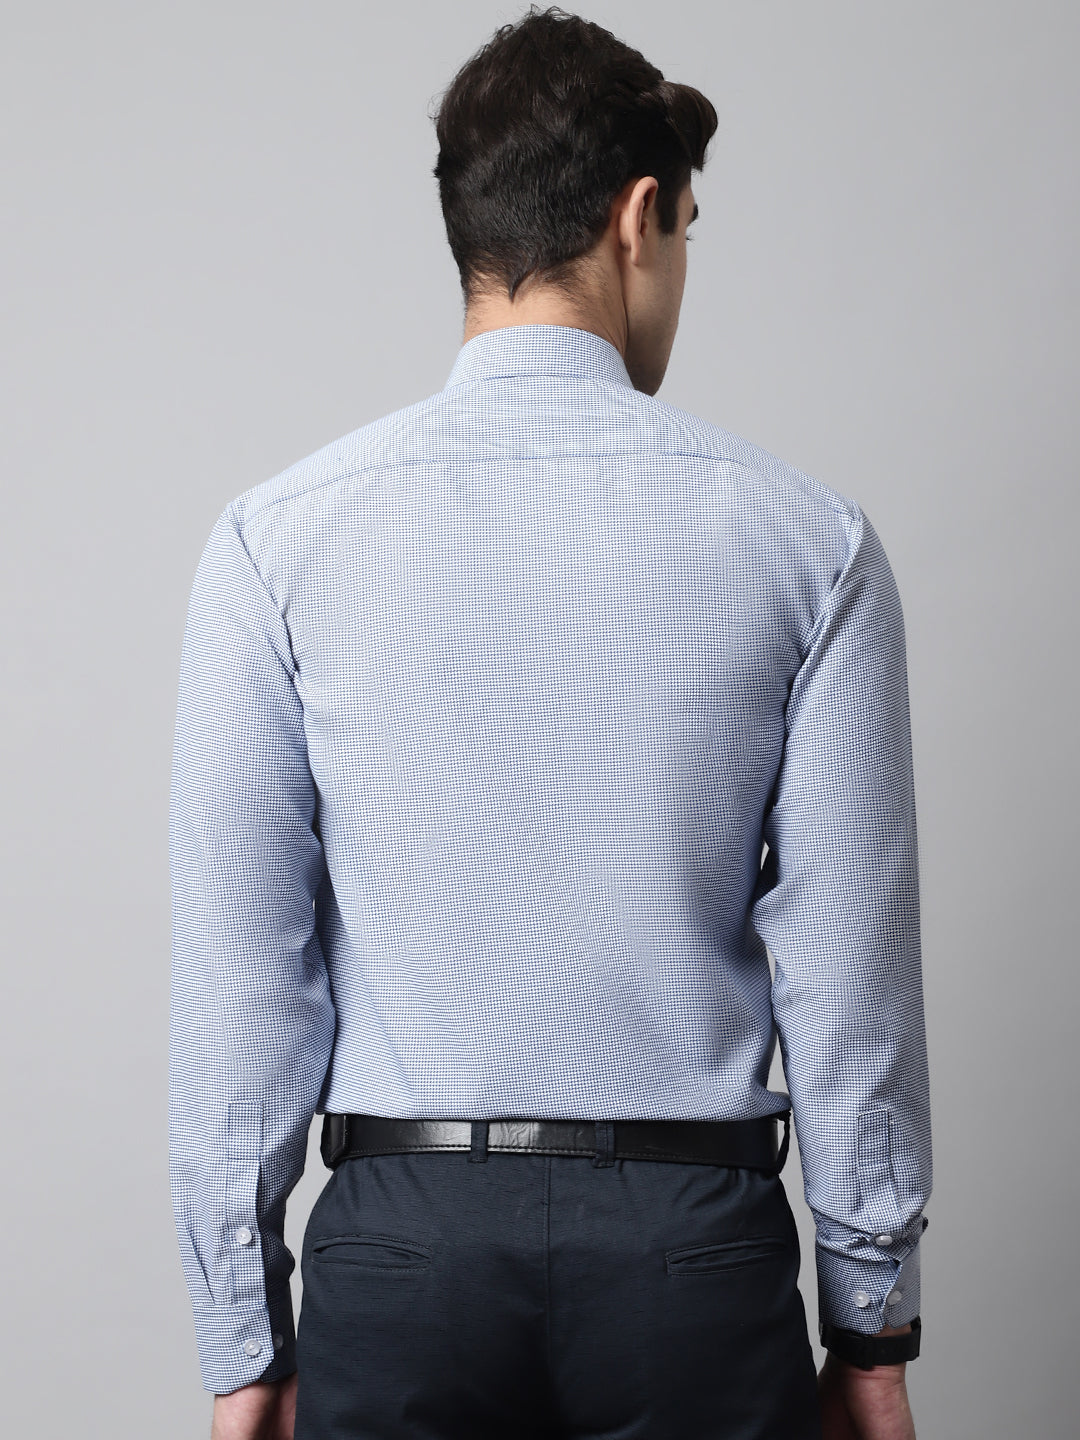 Men Blue Checks Pure Cotton Formal Shirt